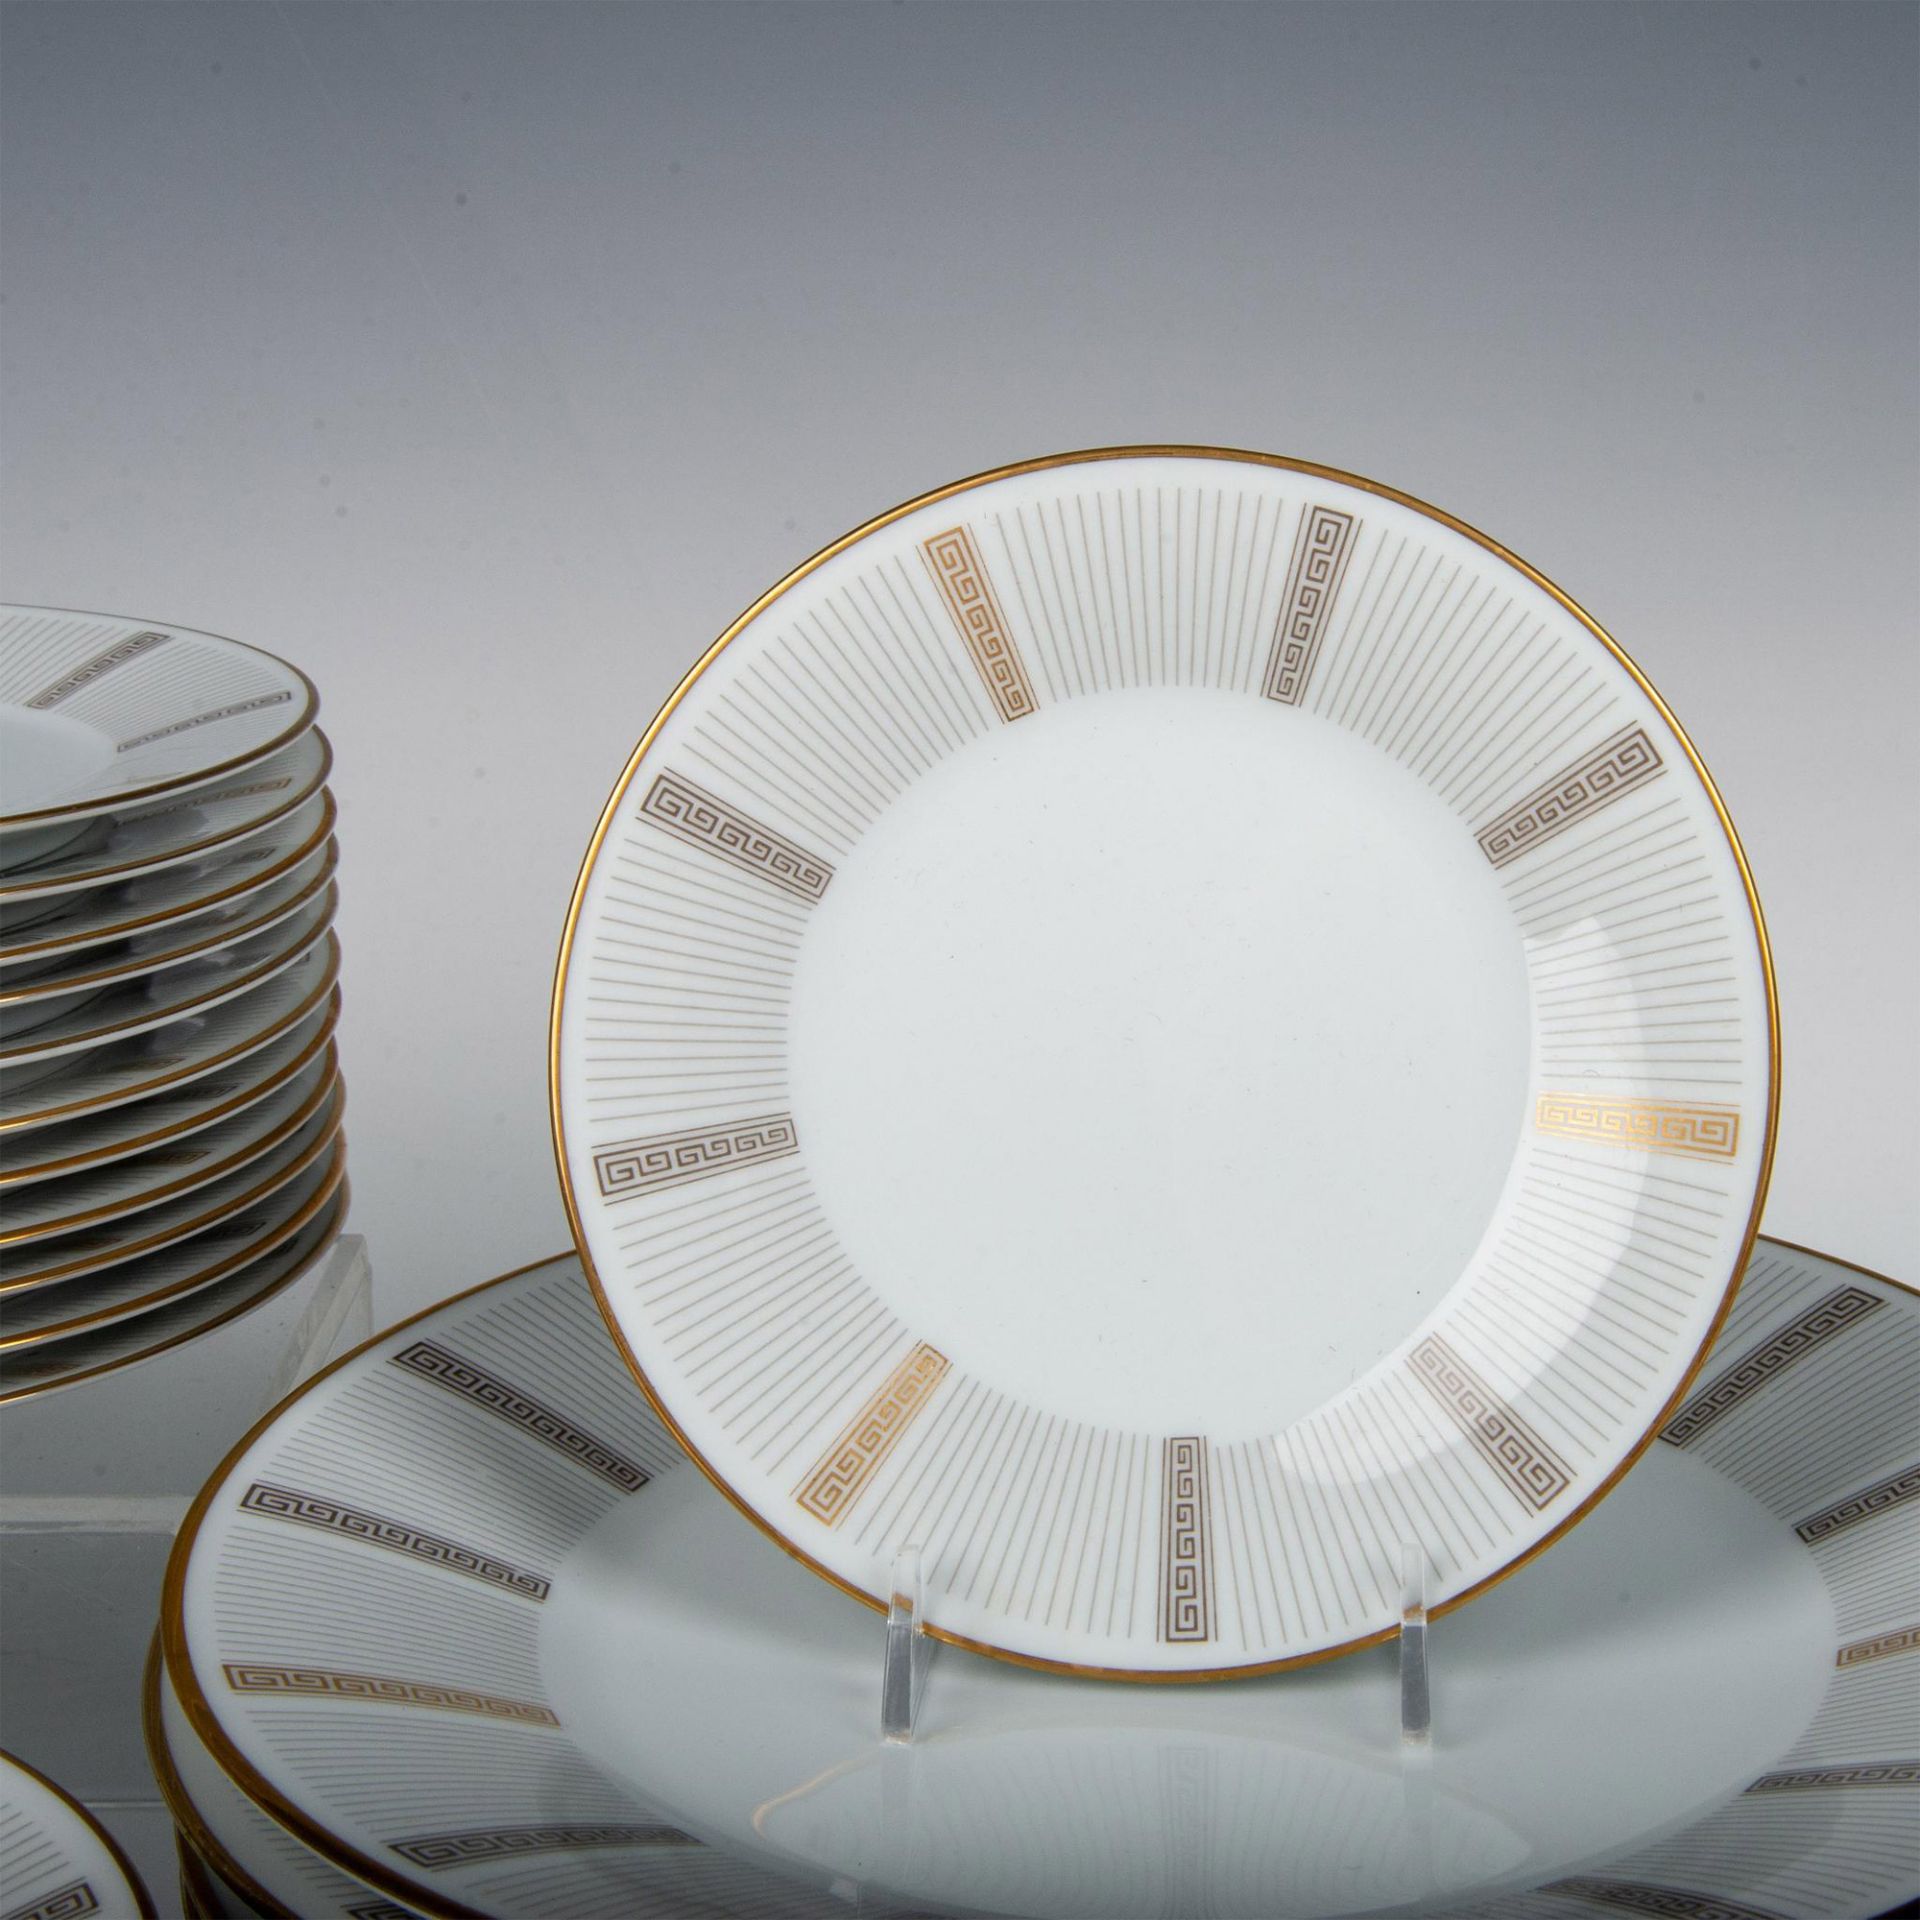 80pc Noritake Porcelain Dinner Ware, Humoresque - Image 2 of 5